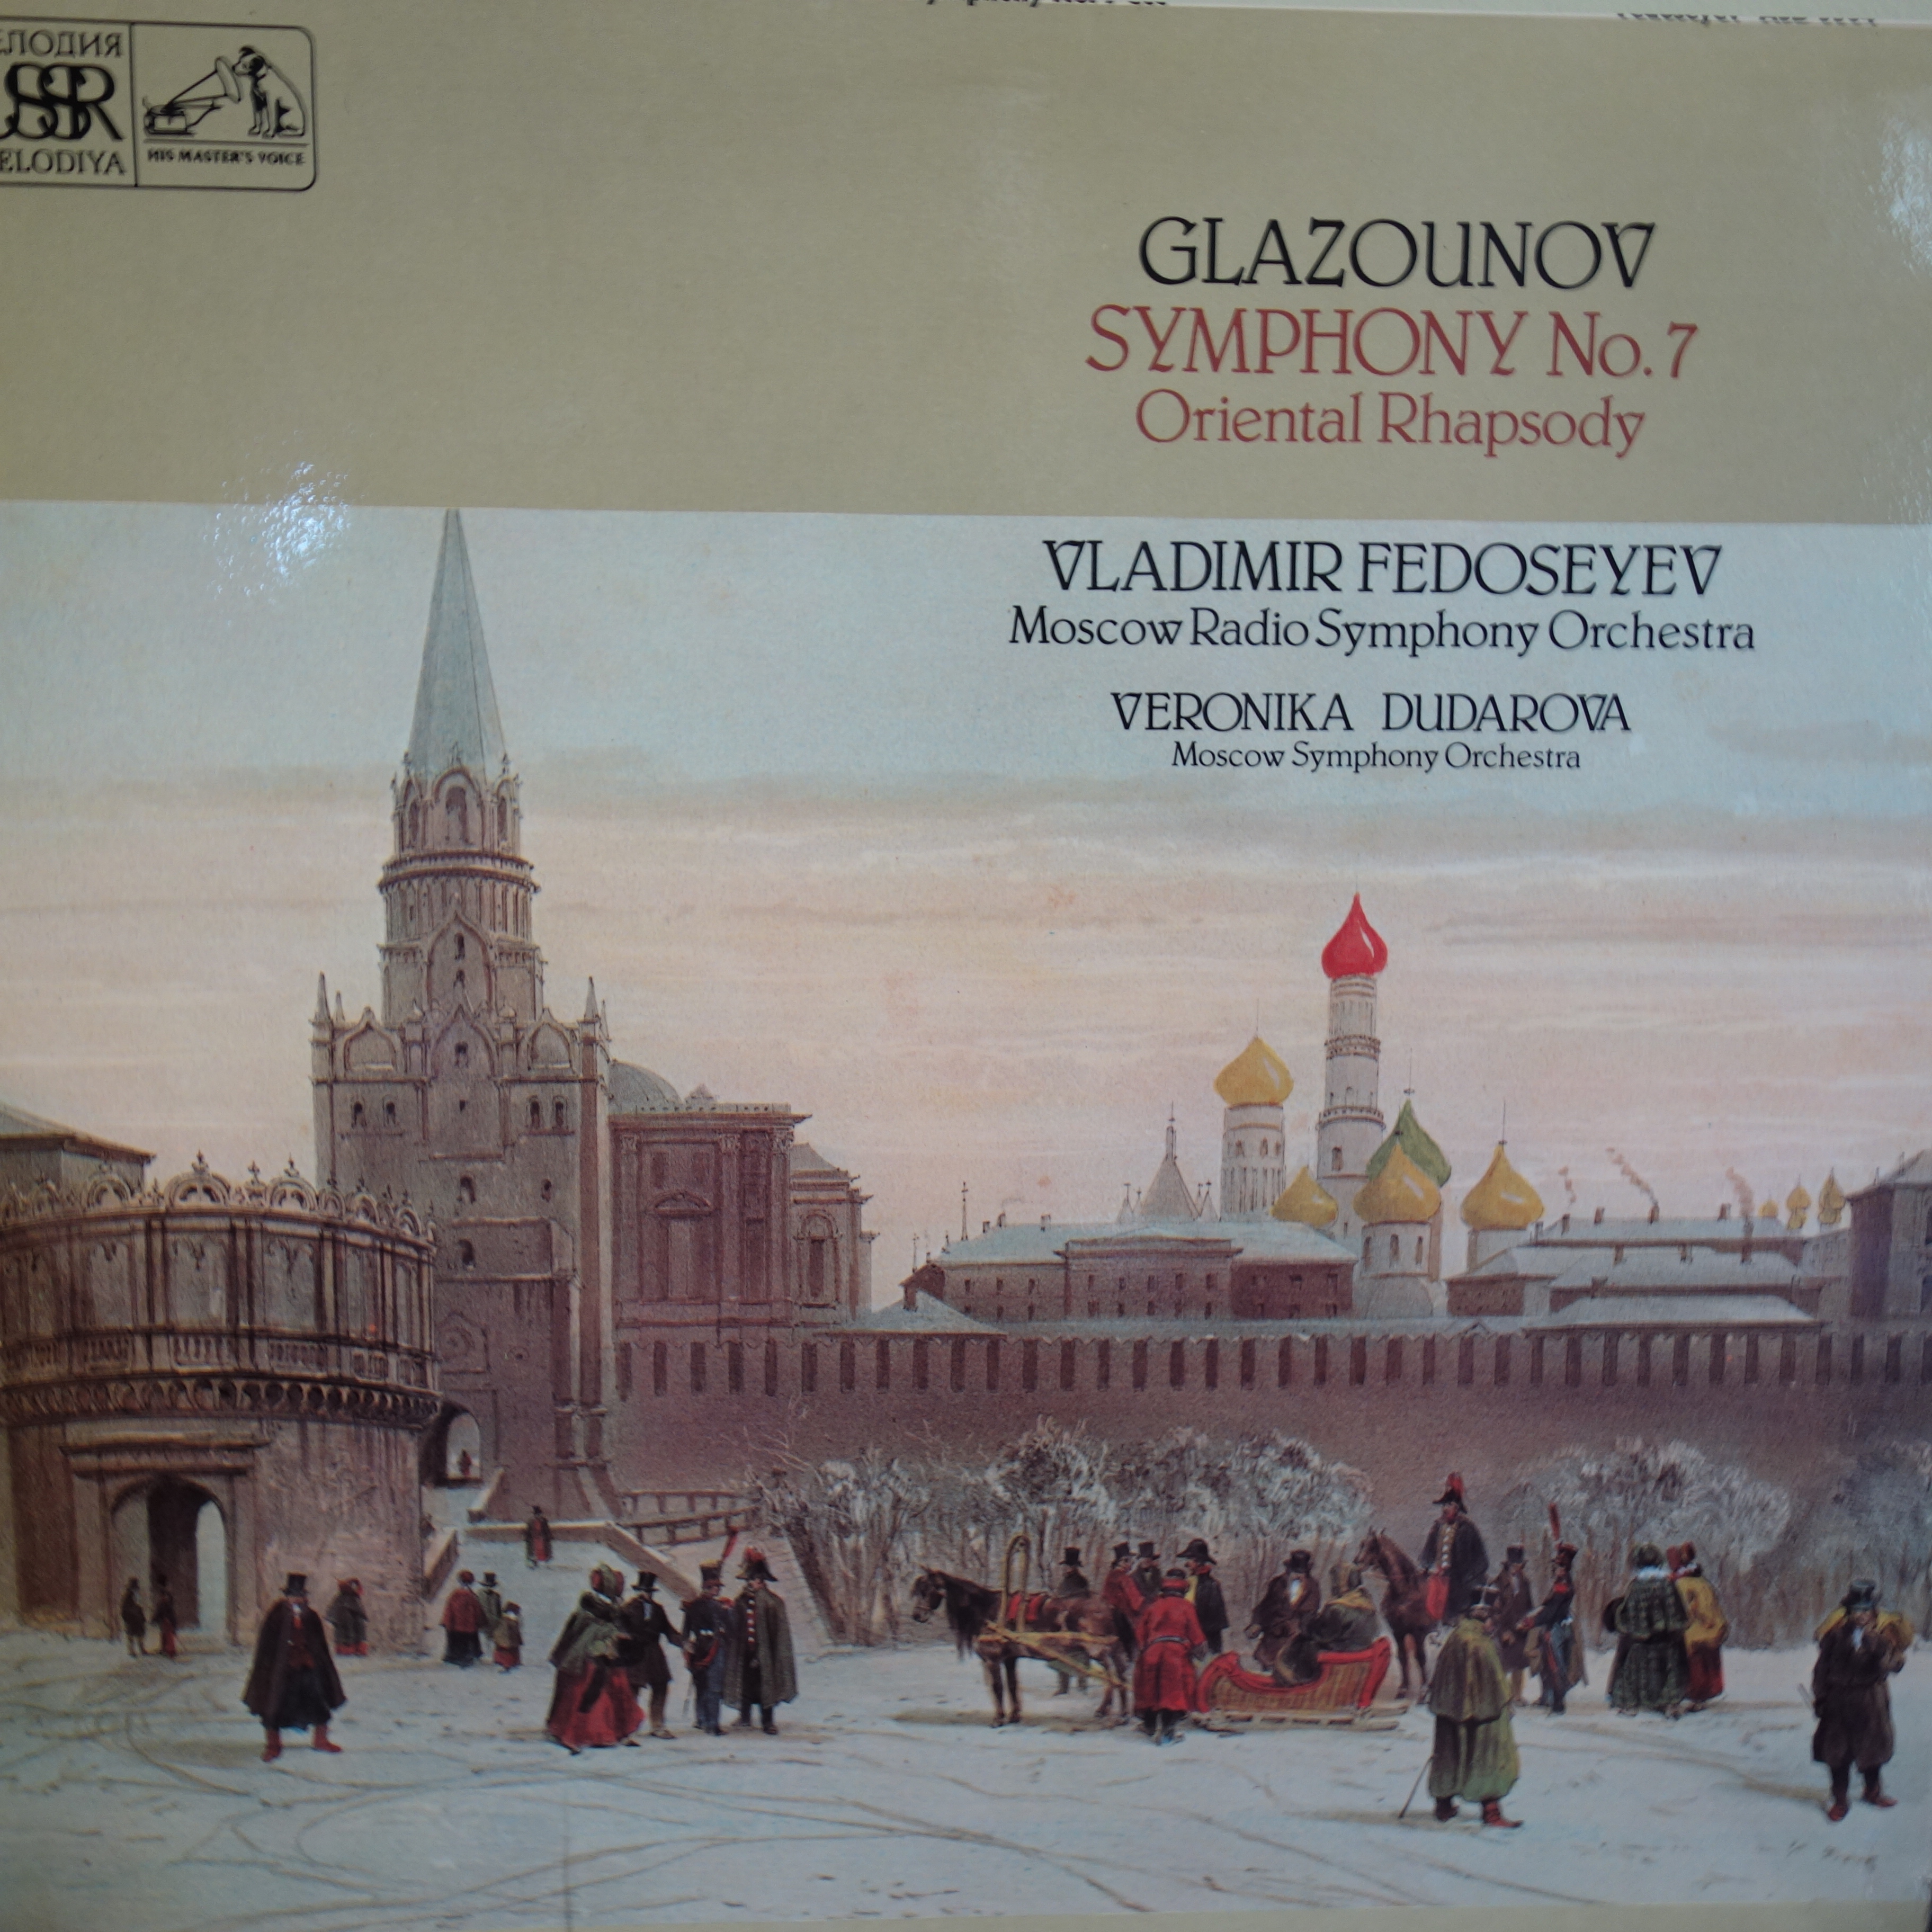 ASD 3504 Glazounov Symphony No. 7, Oriental Rhapsody / Fedoseyev MRSO / Dudarova MSO